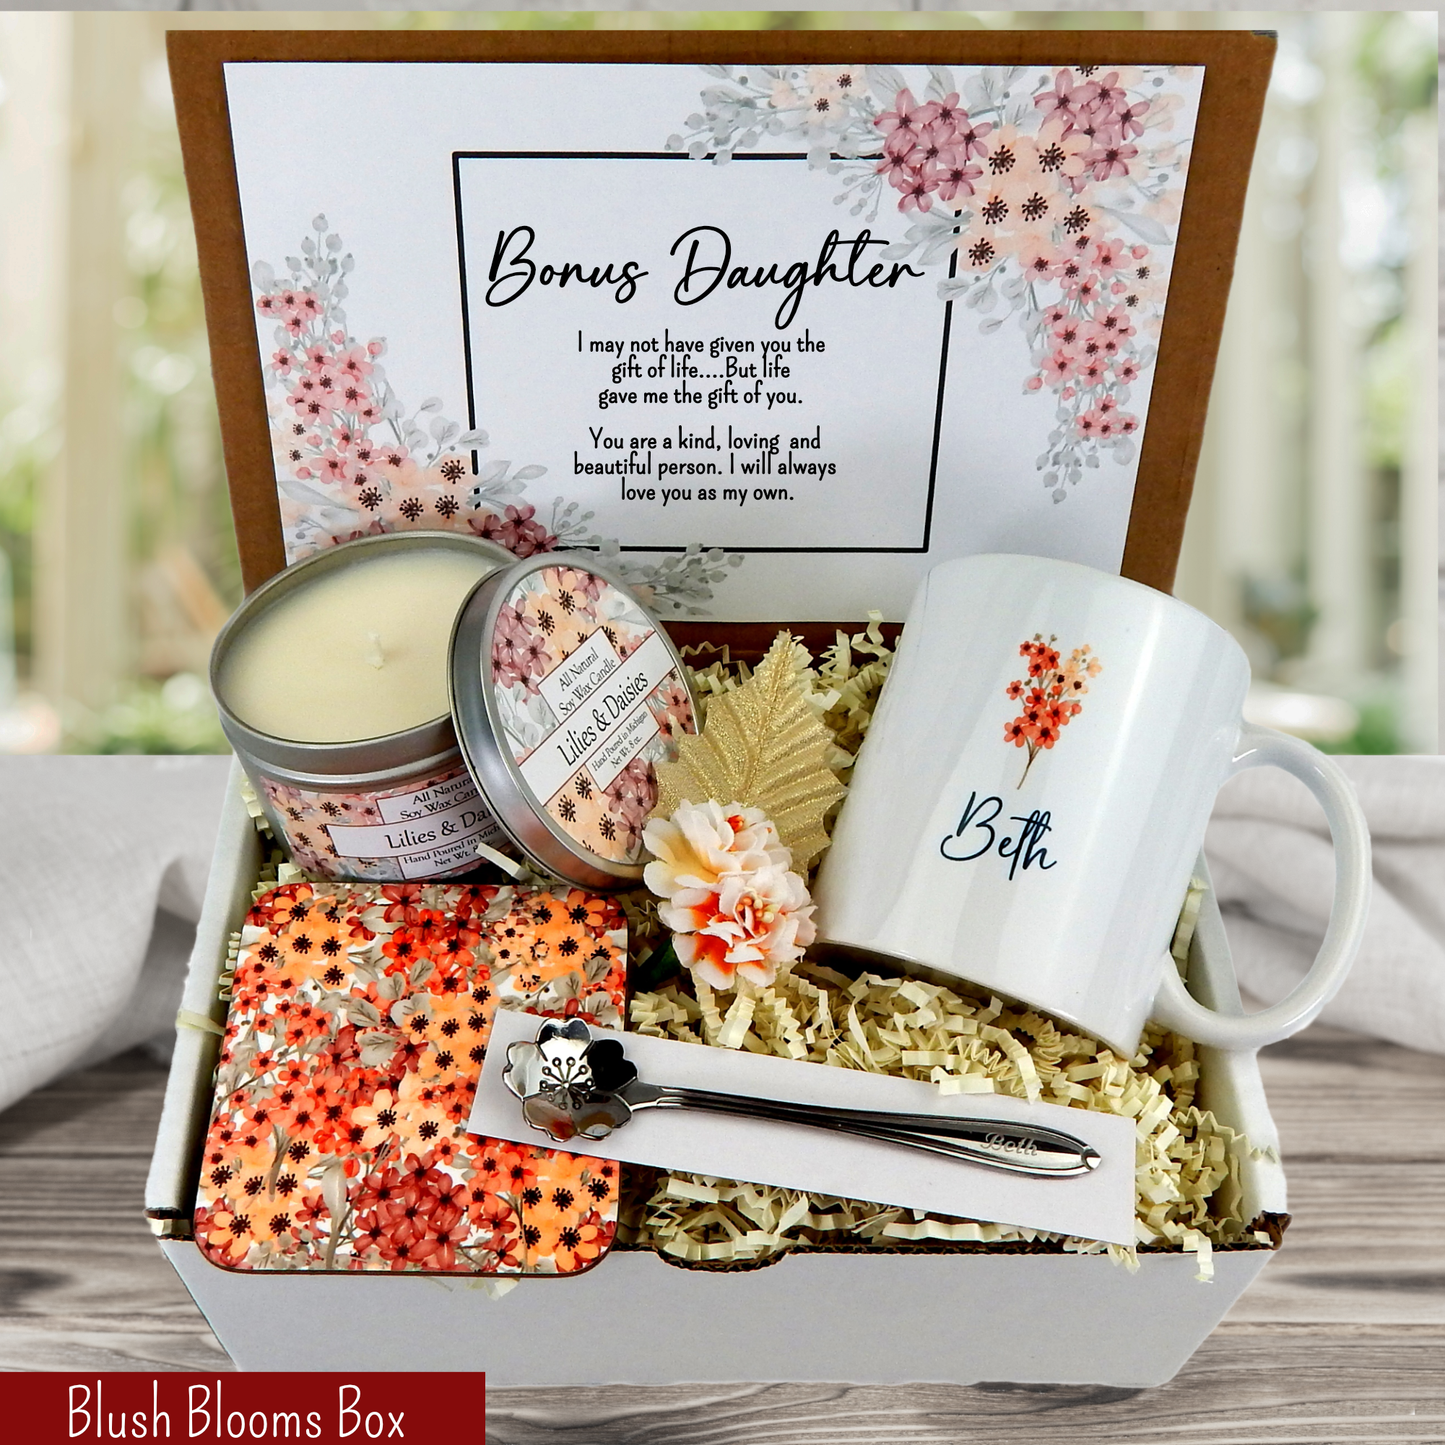 Surprise gift for bonus daughter or stepdaughter: Personalized keepsake